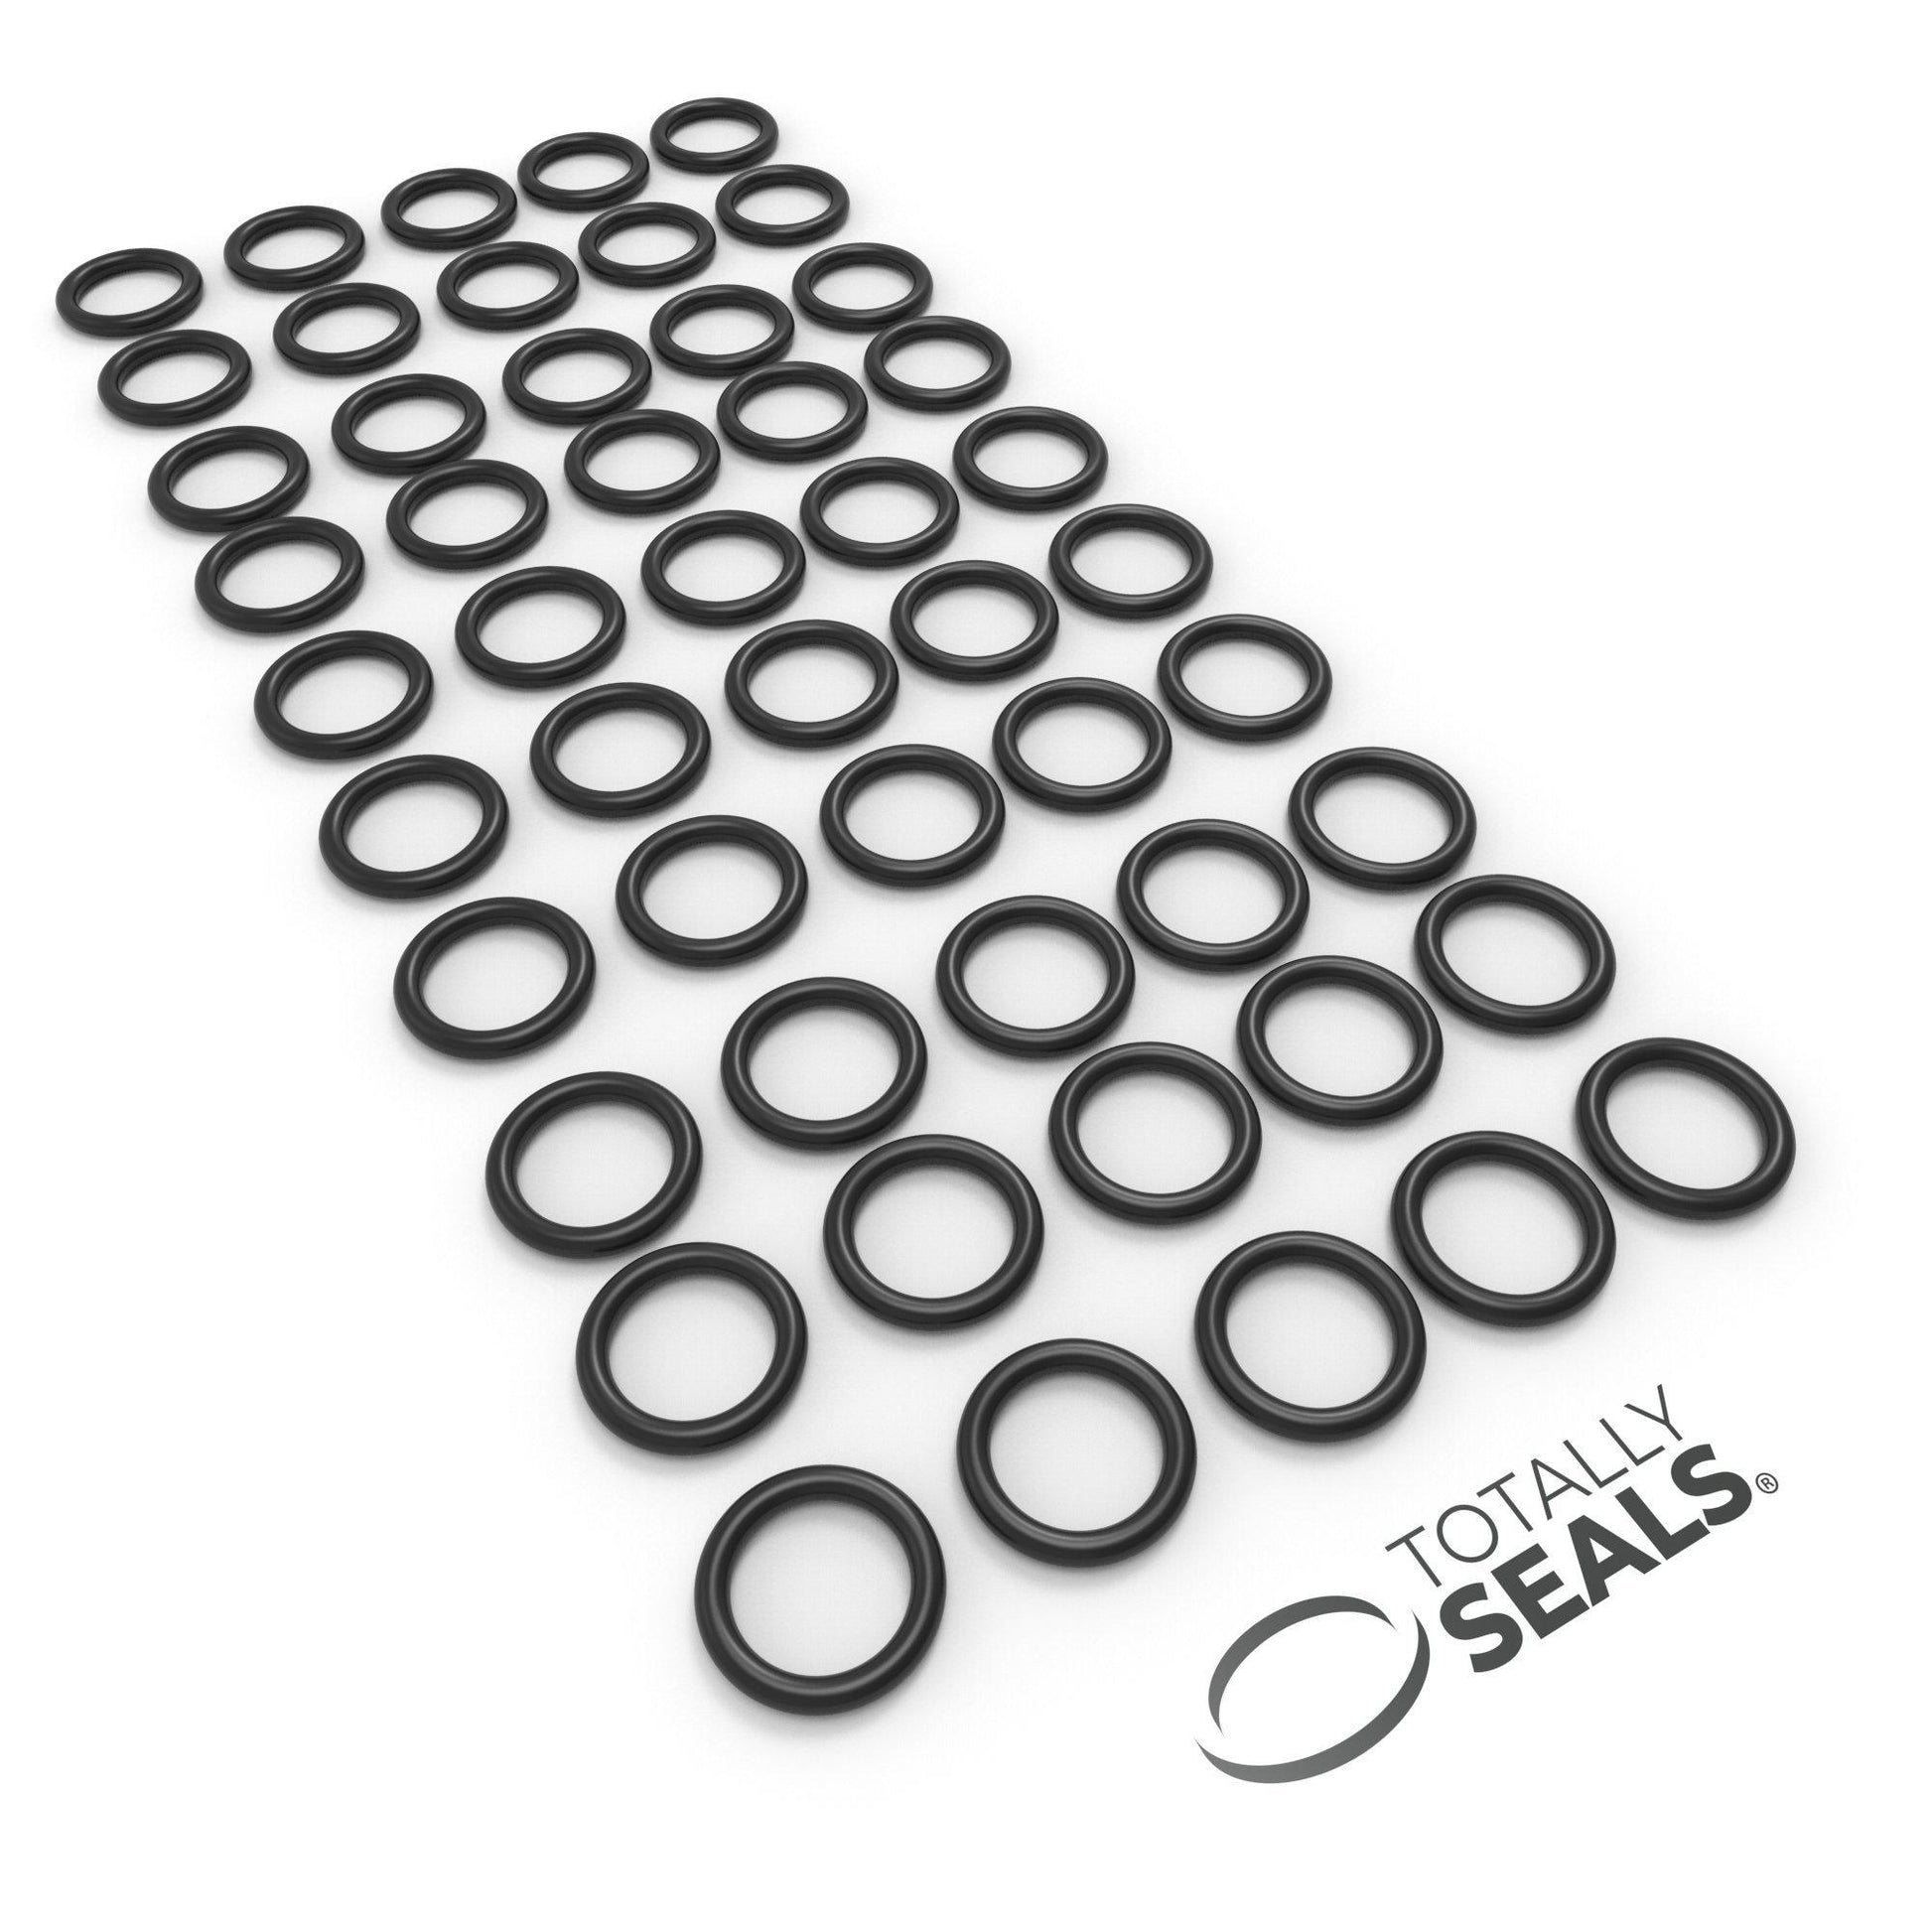 Azië Kom langs om het te weten vrijheid 4mm x 1mm (6mm OD) Nitrile O-Rings – Totally Seals